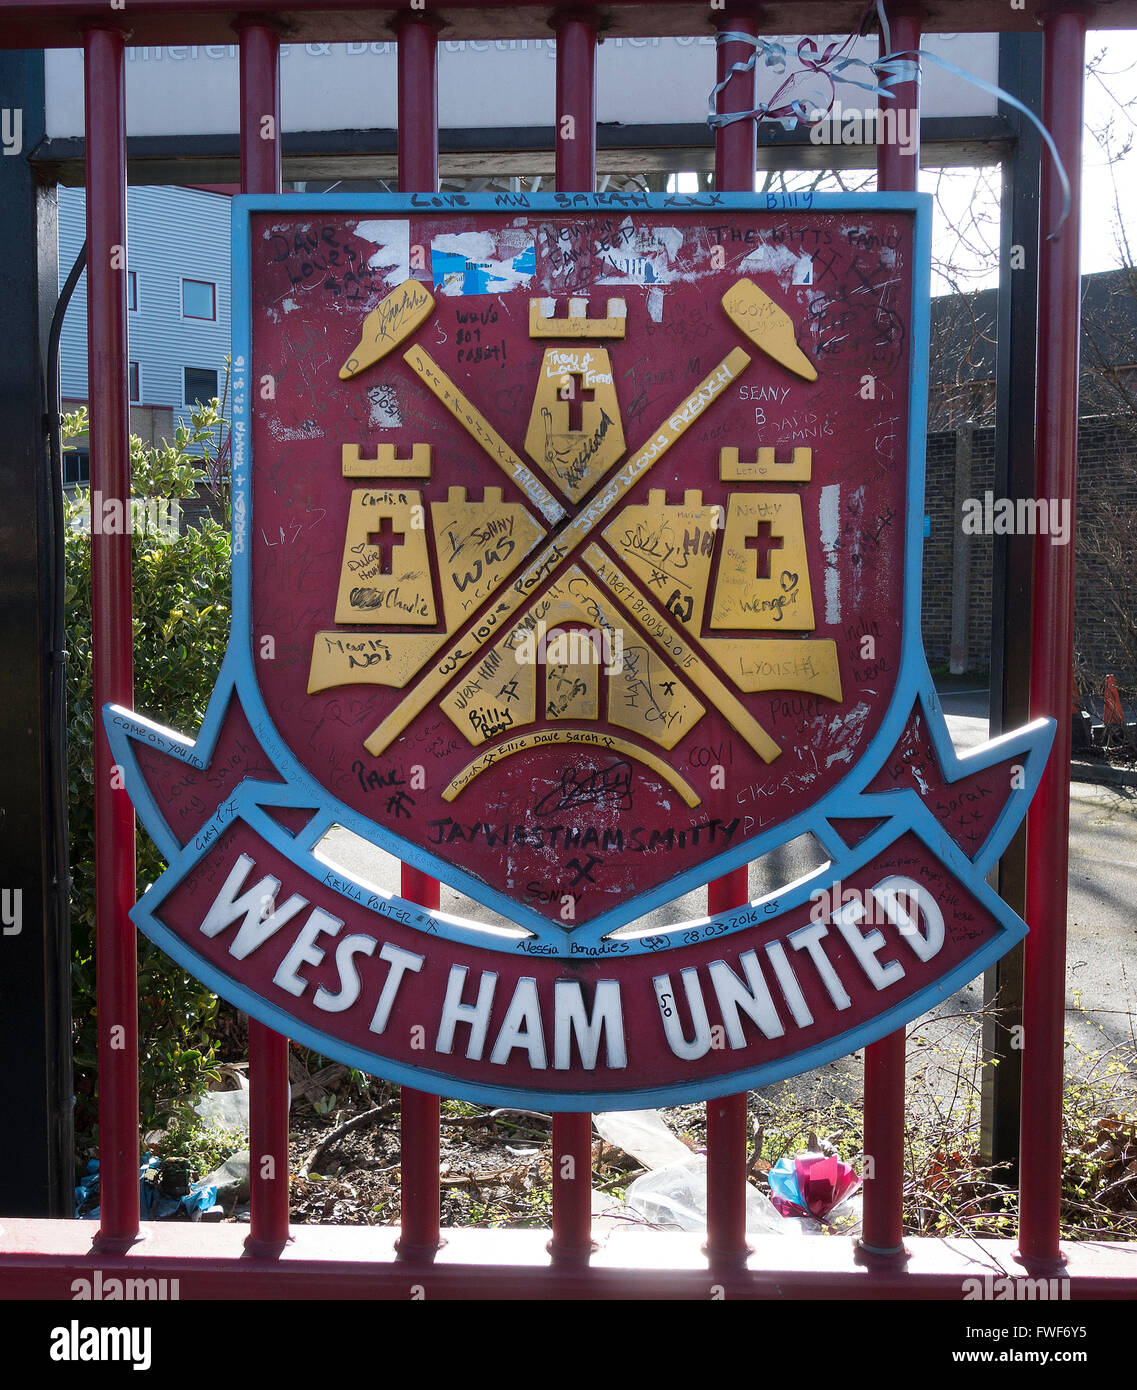 West Ham United shield outside Boleyn Ground stadium in Upton Park Stock Photo